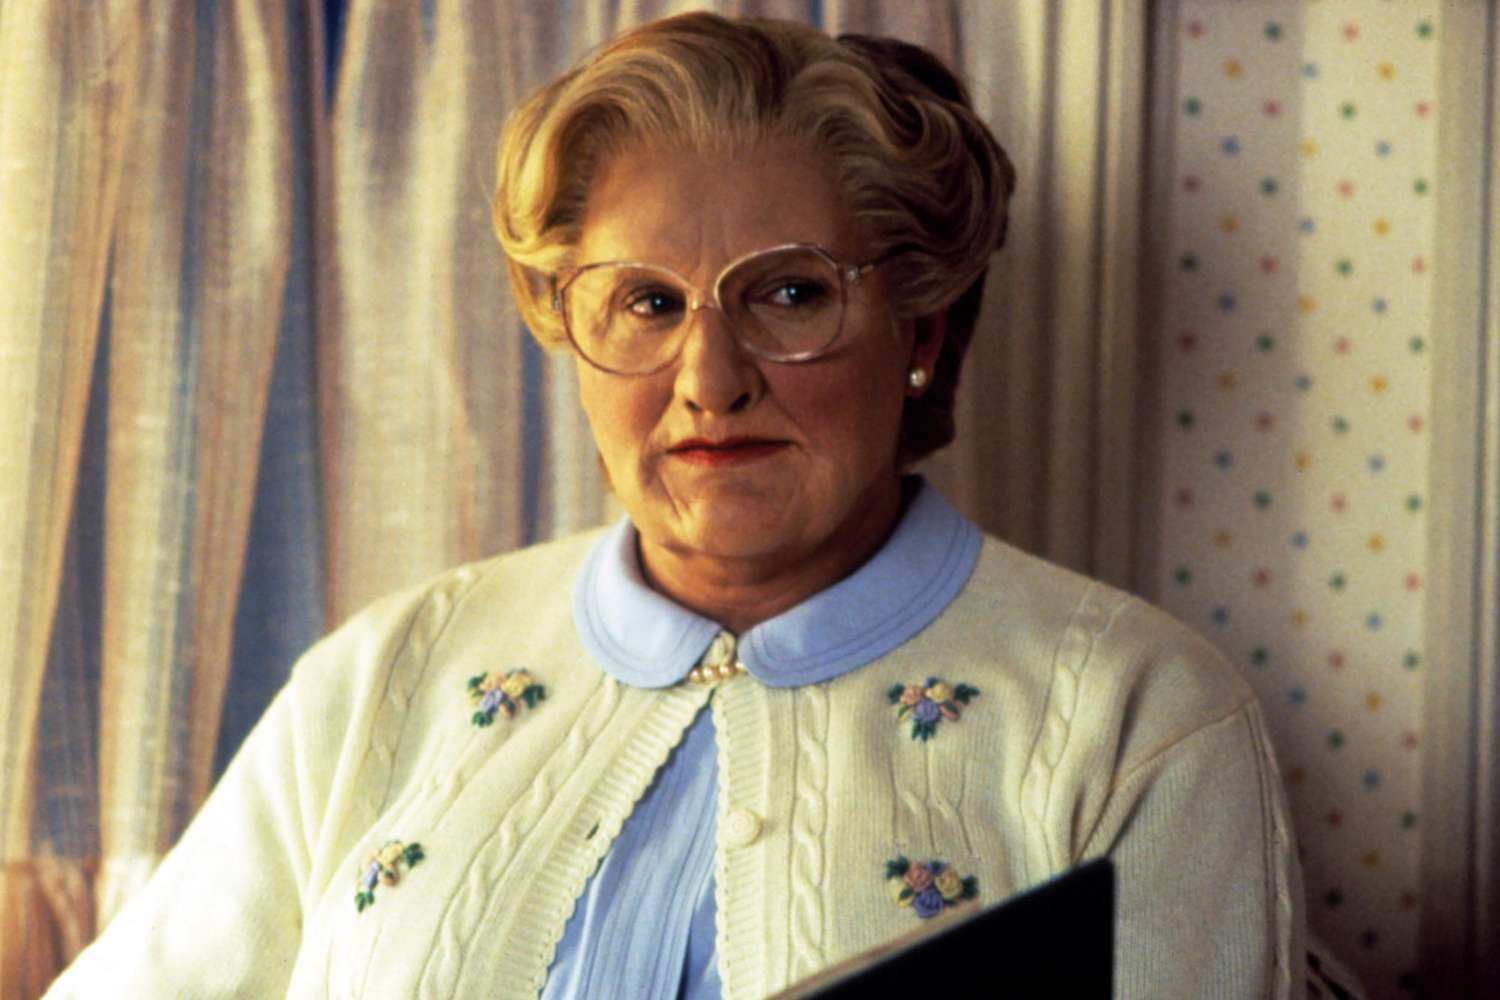 Robin Williams in Mrs. Doubtfire